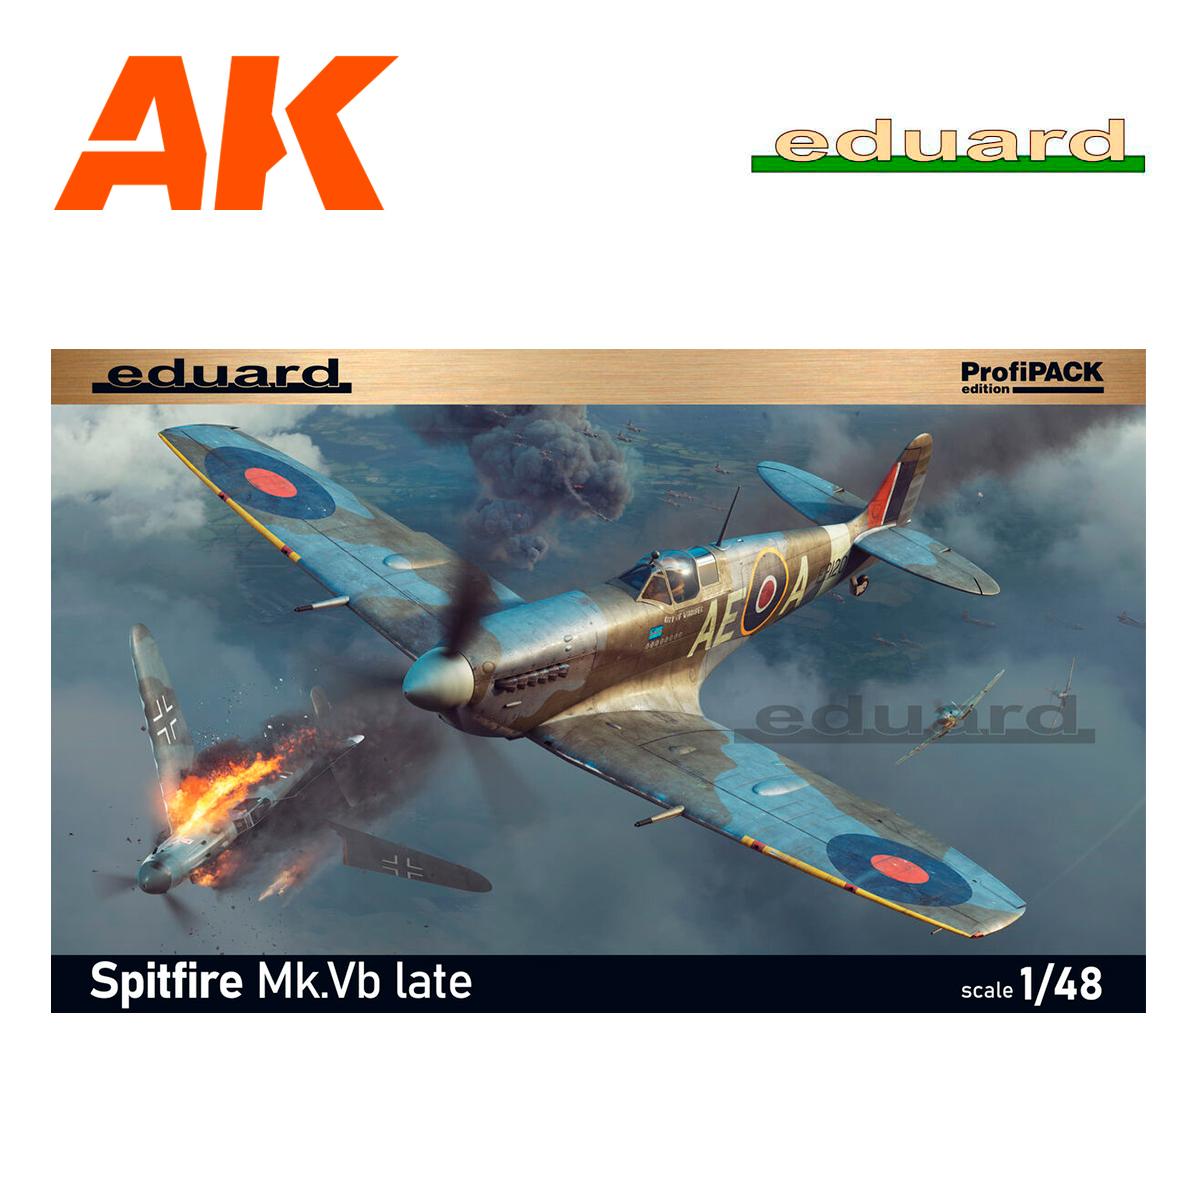 Spitfire Mk.Vb late 1/48